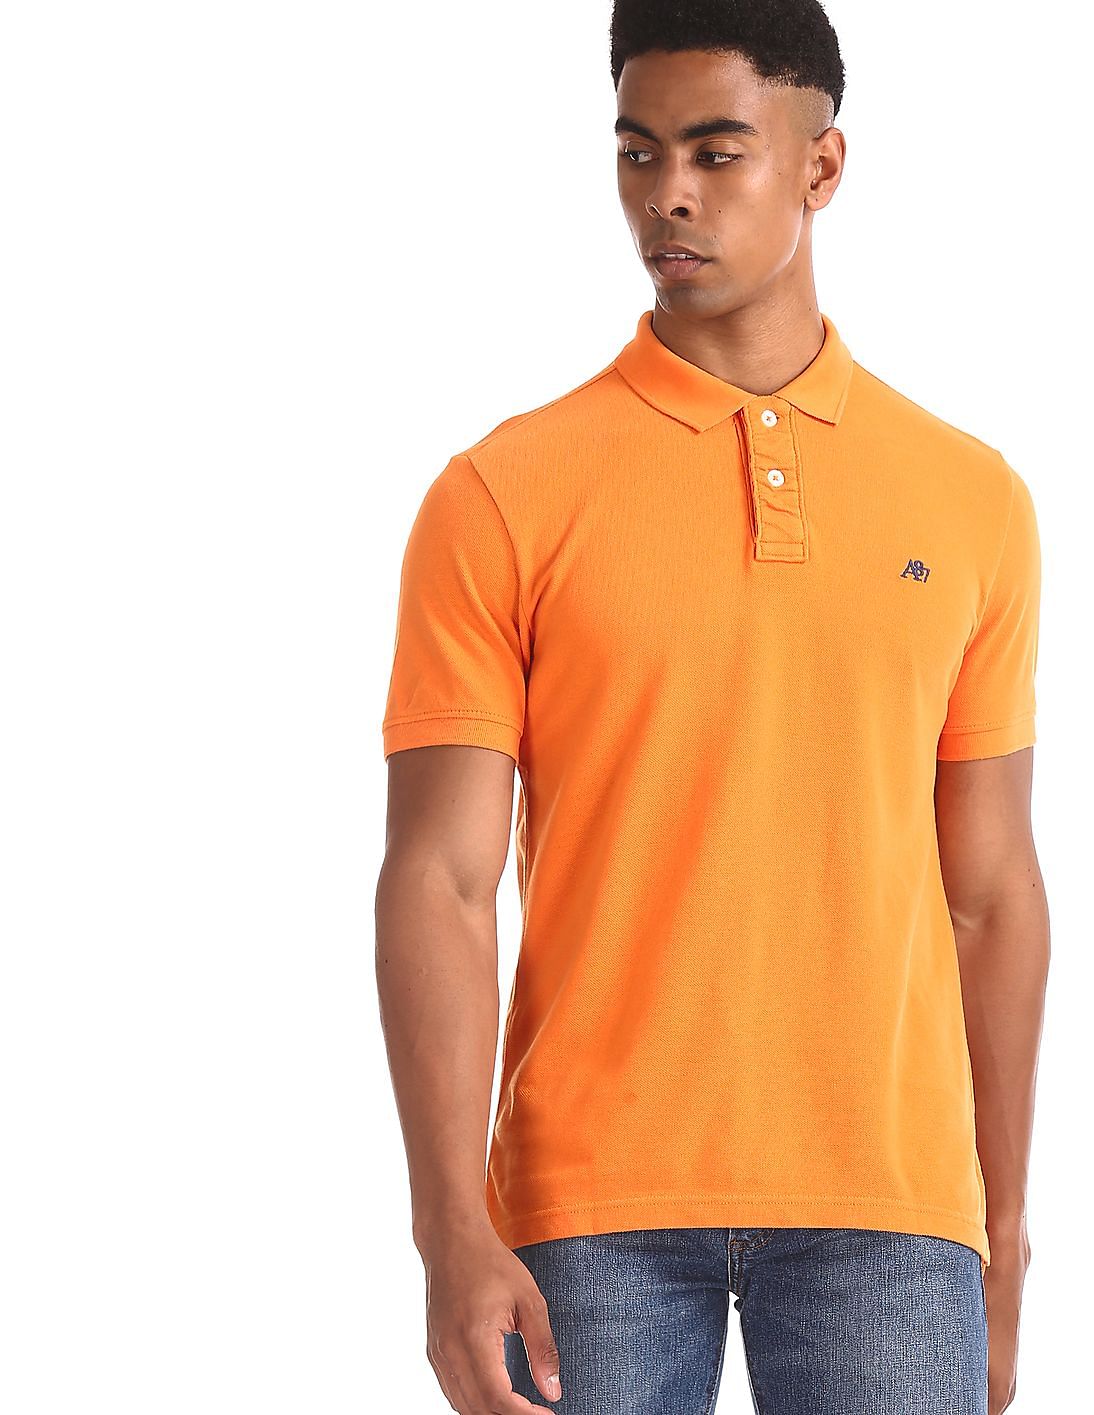 Buy Aeropostale Orange Solid Cotton Pique Polo Shirt - NNNOW.com